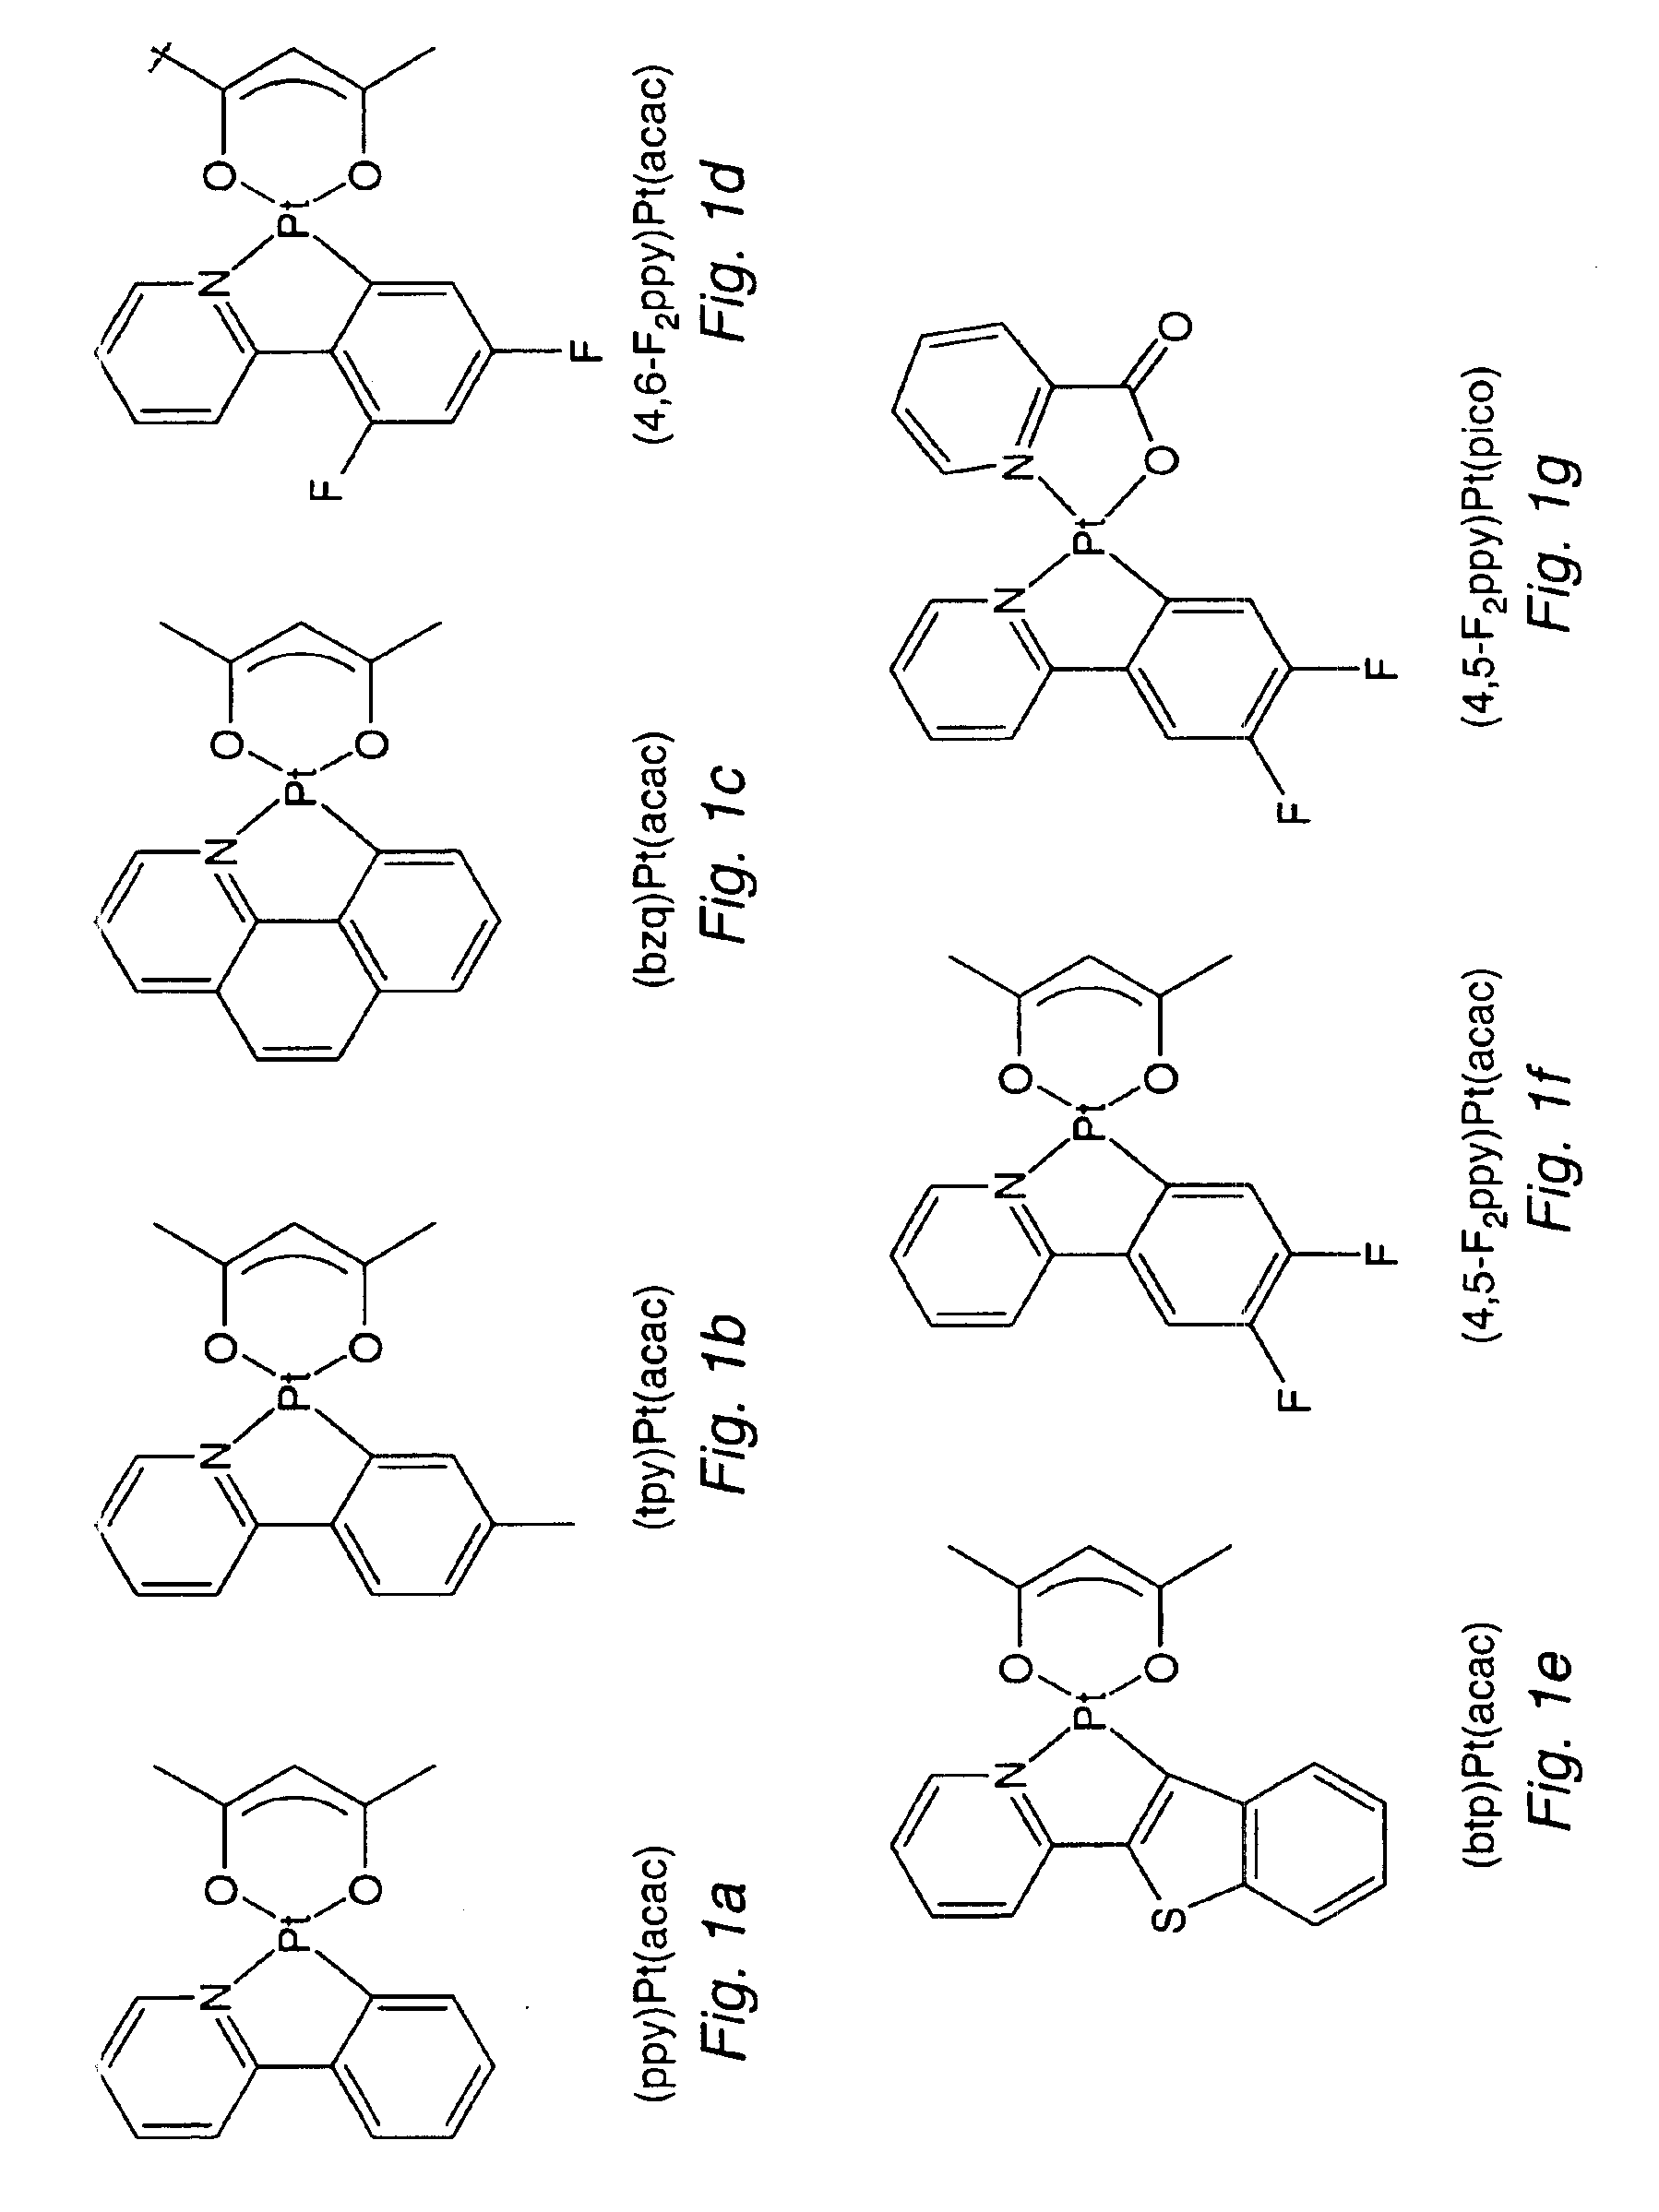 Organometallic platinum complexes for phosphorescence based organic light emitting devices